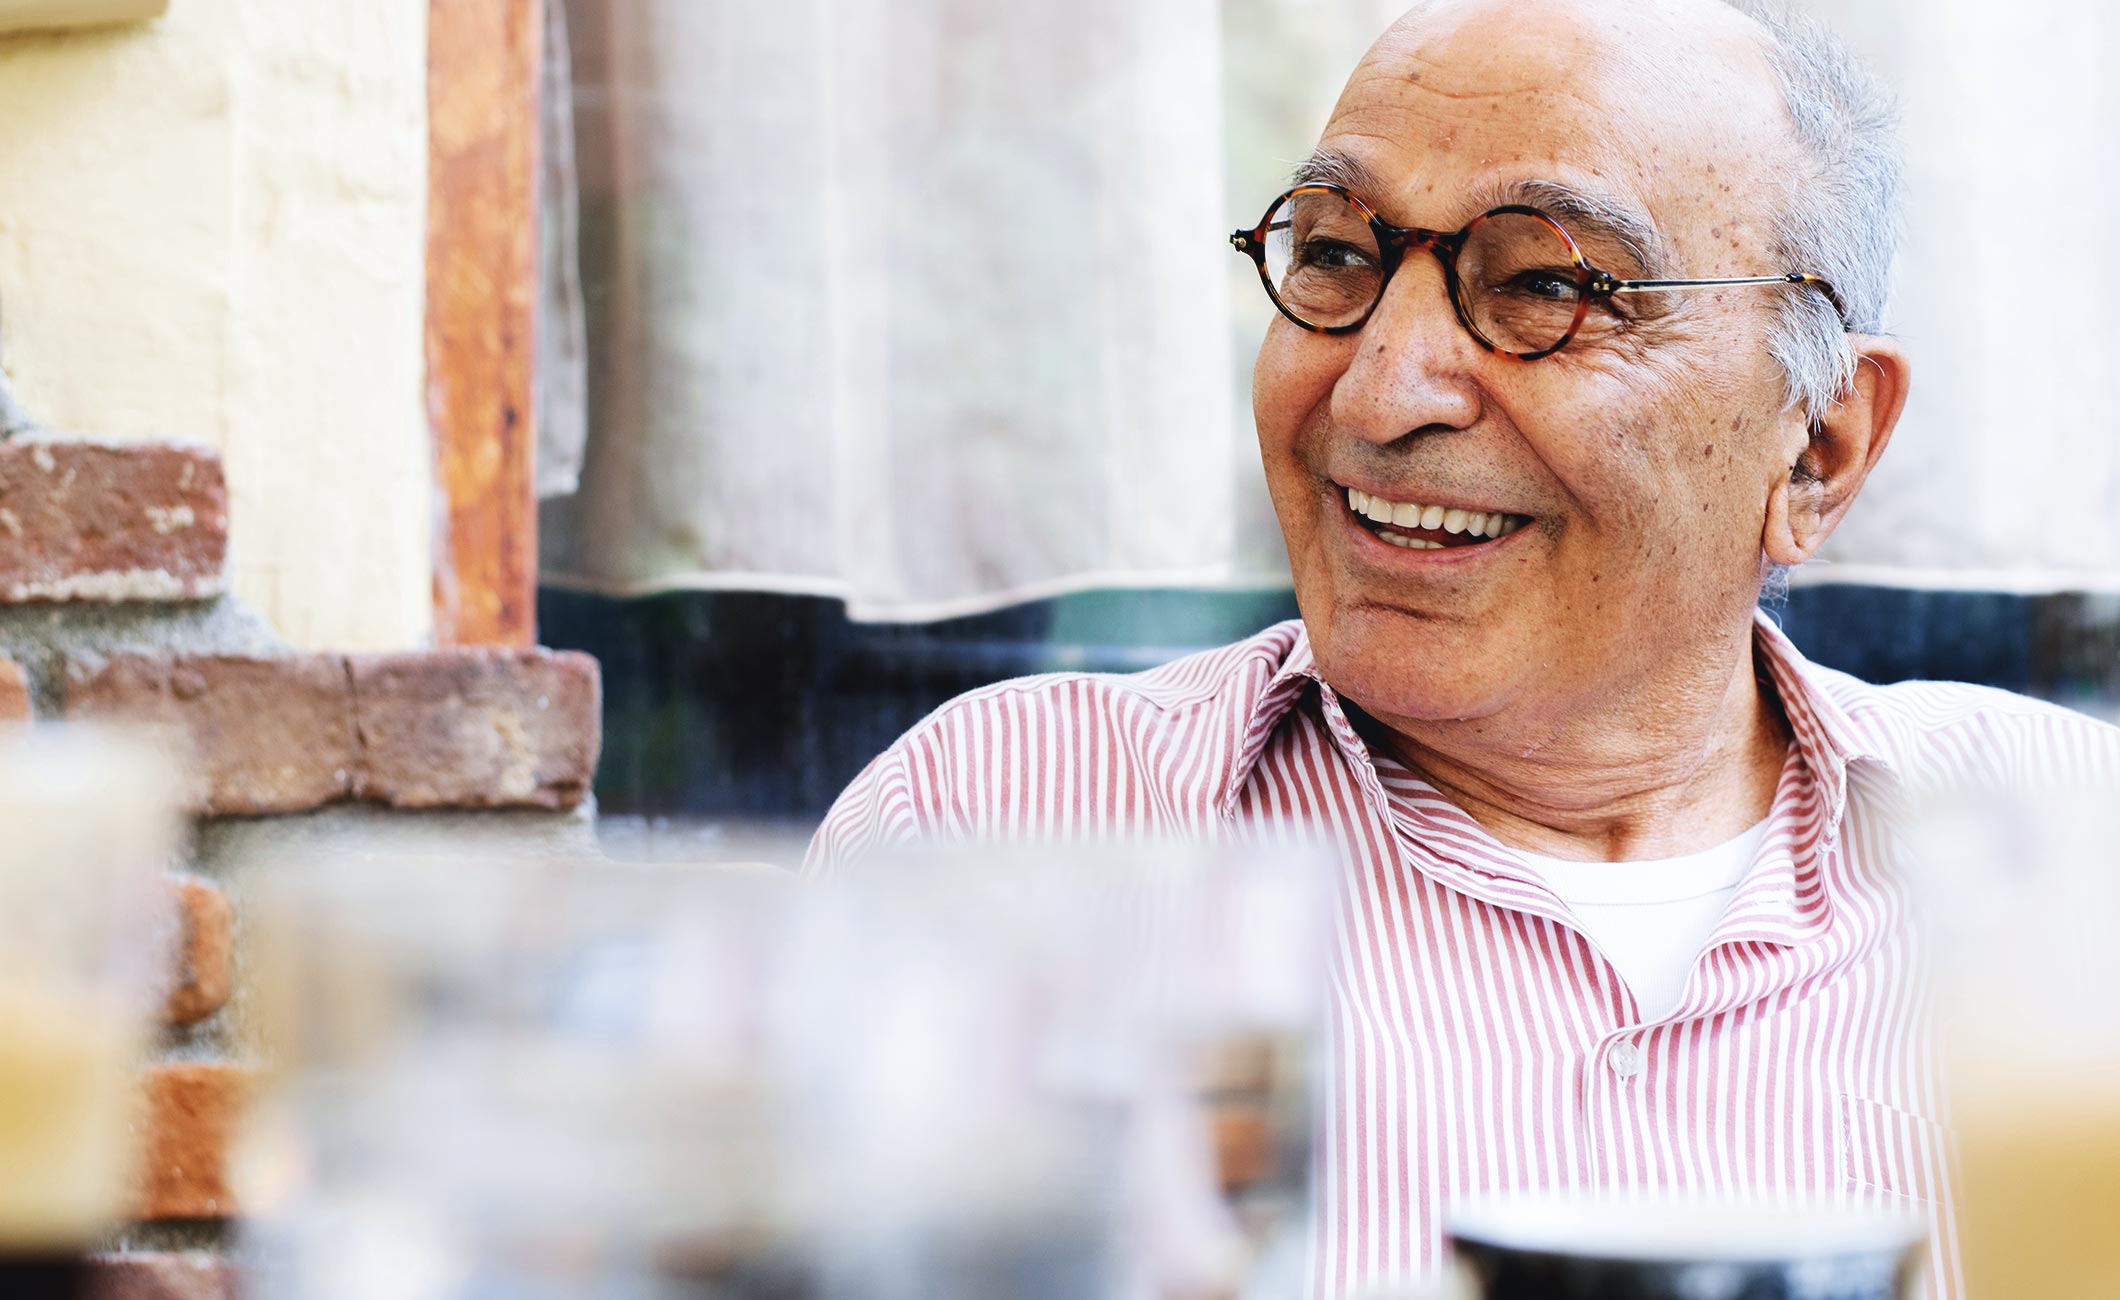 older man with glasses smiling 